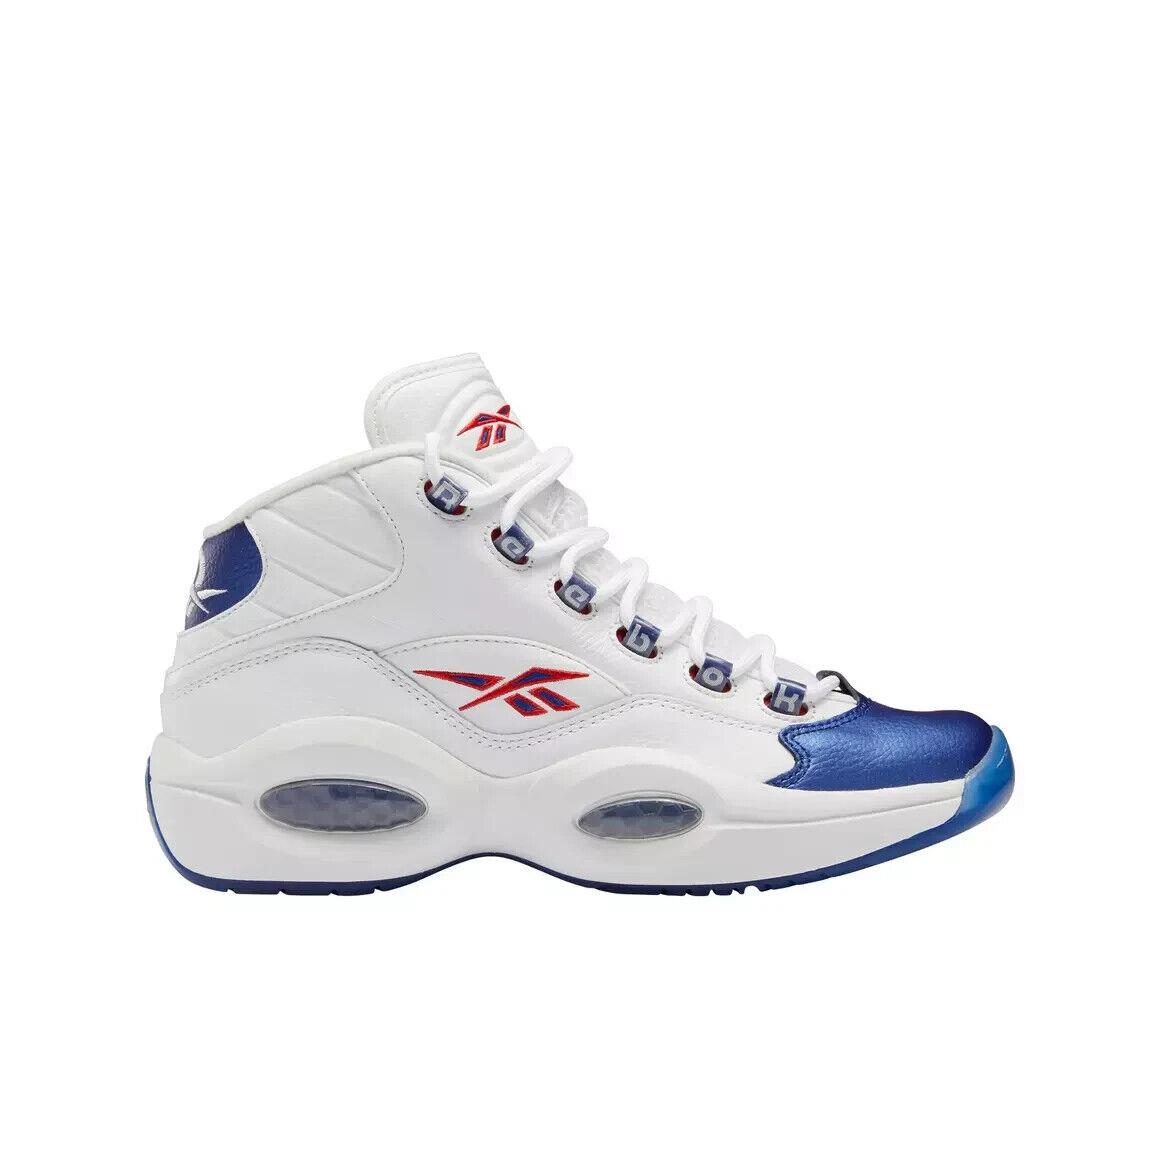 Mens Reebok Question Mid Basketball Shoes Size 8 White Blue GX0227 Iverson